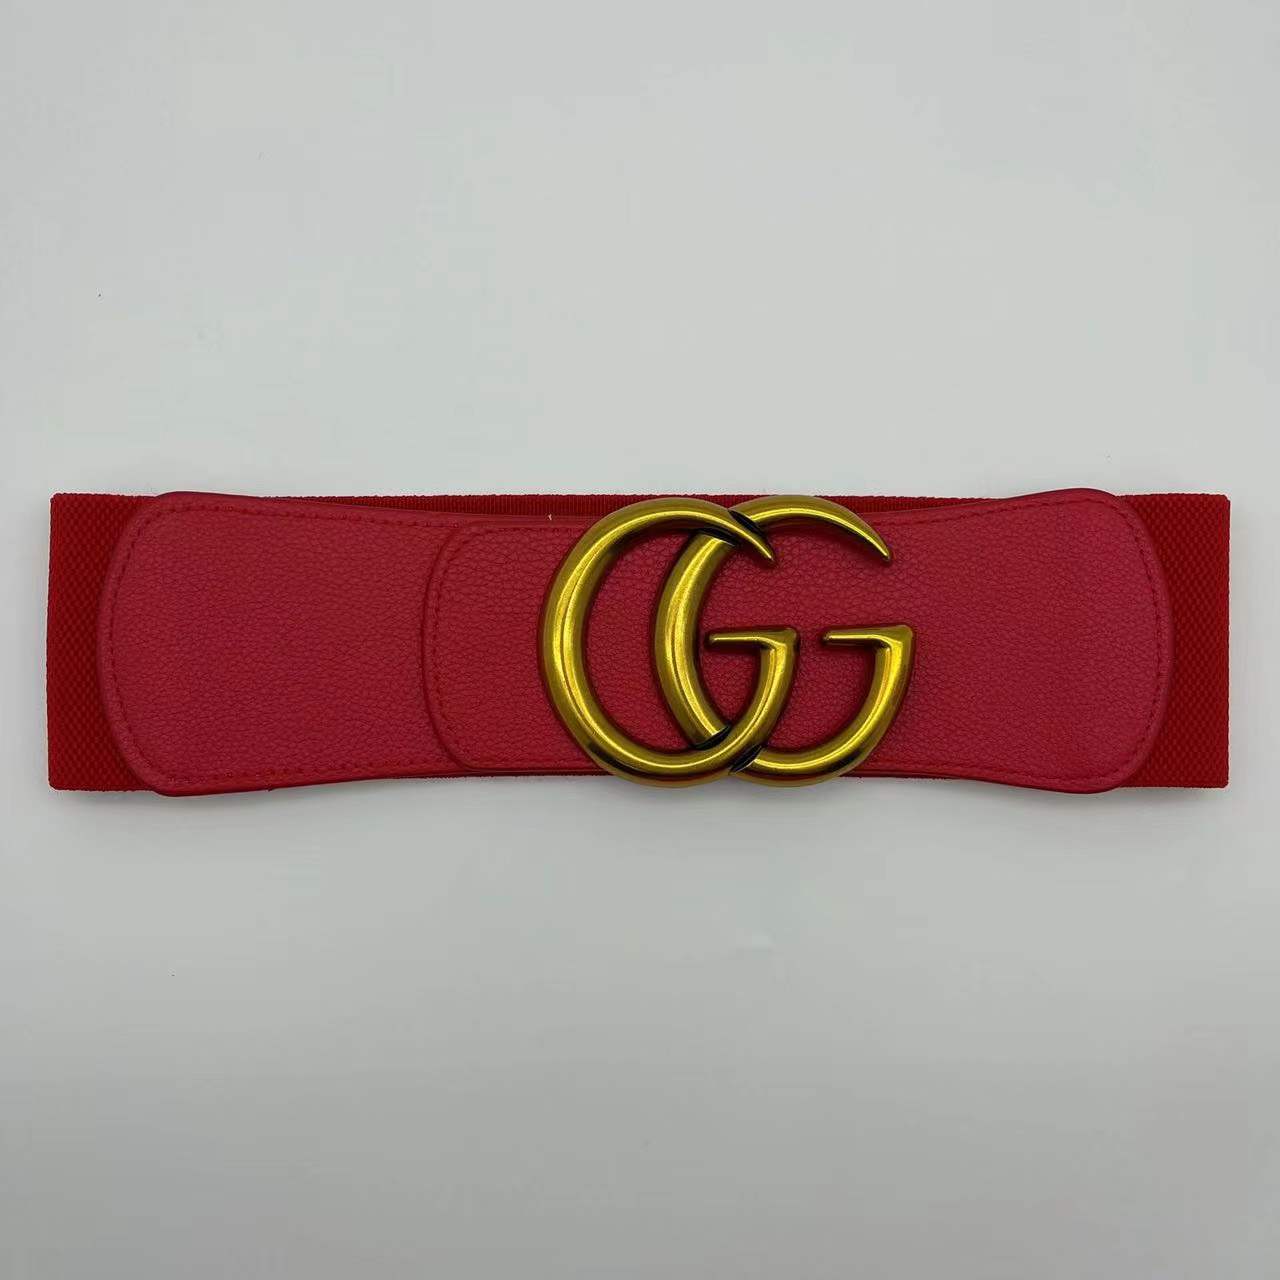 GG Gucci Elastic waist tape/Belt